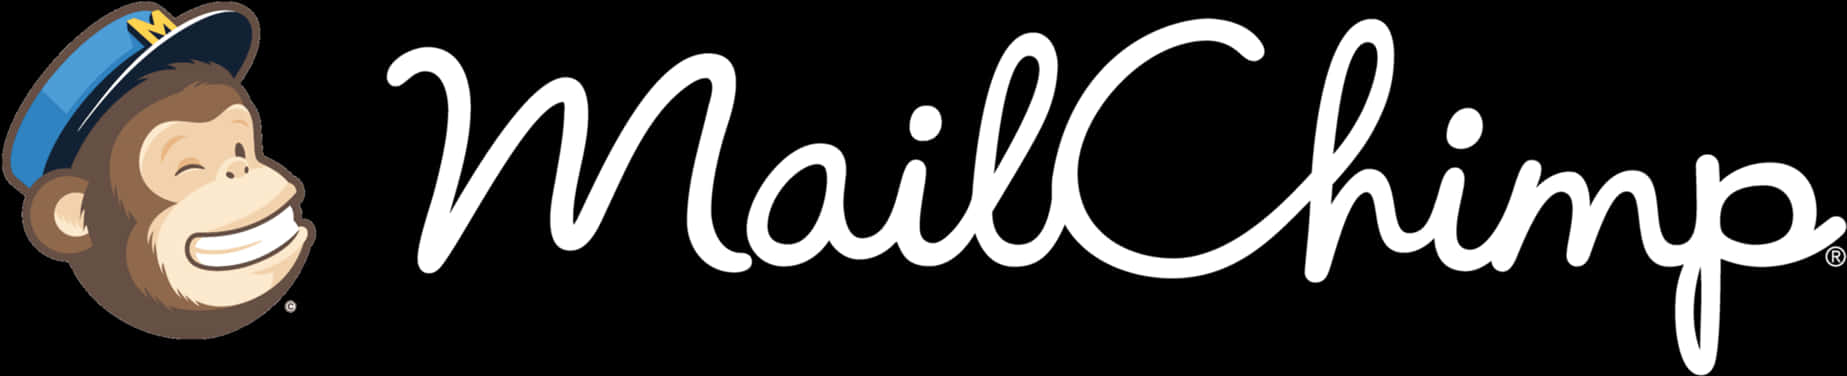 Mailchimp Logo In Cursive White Font